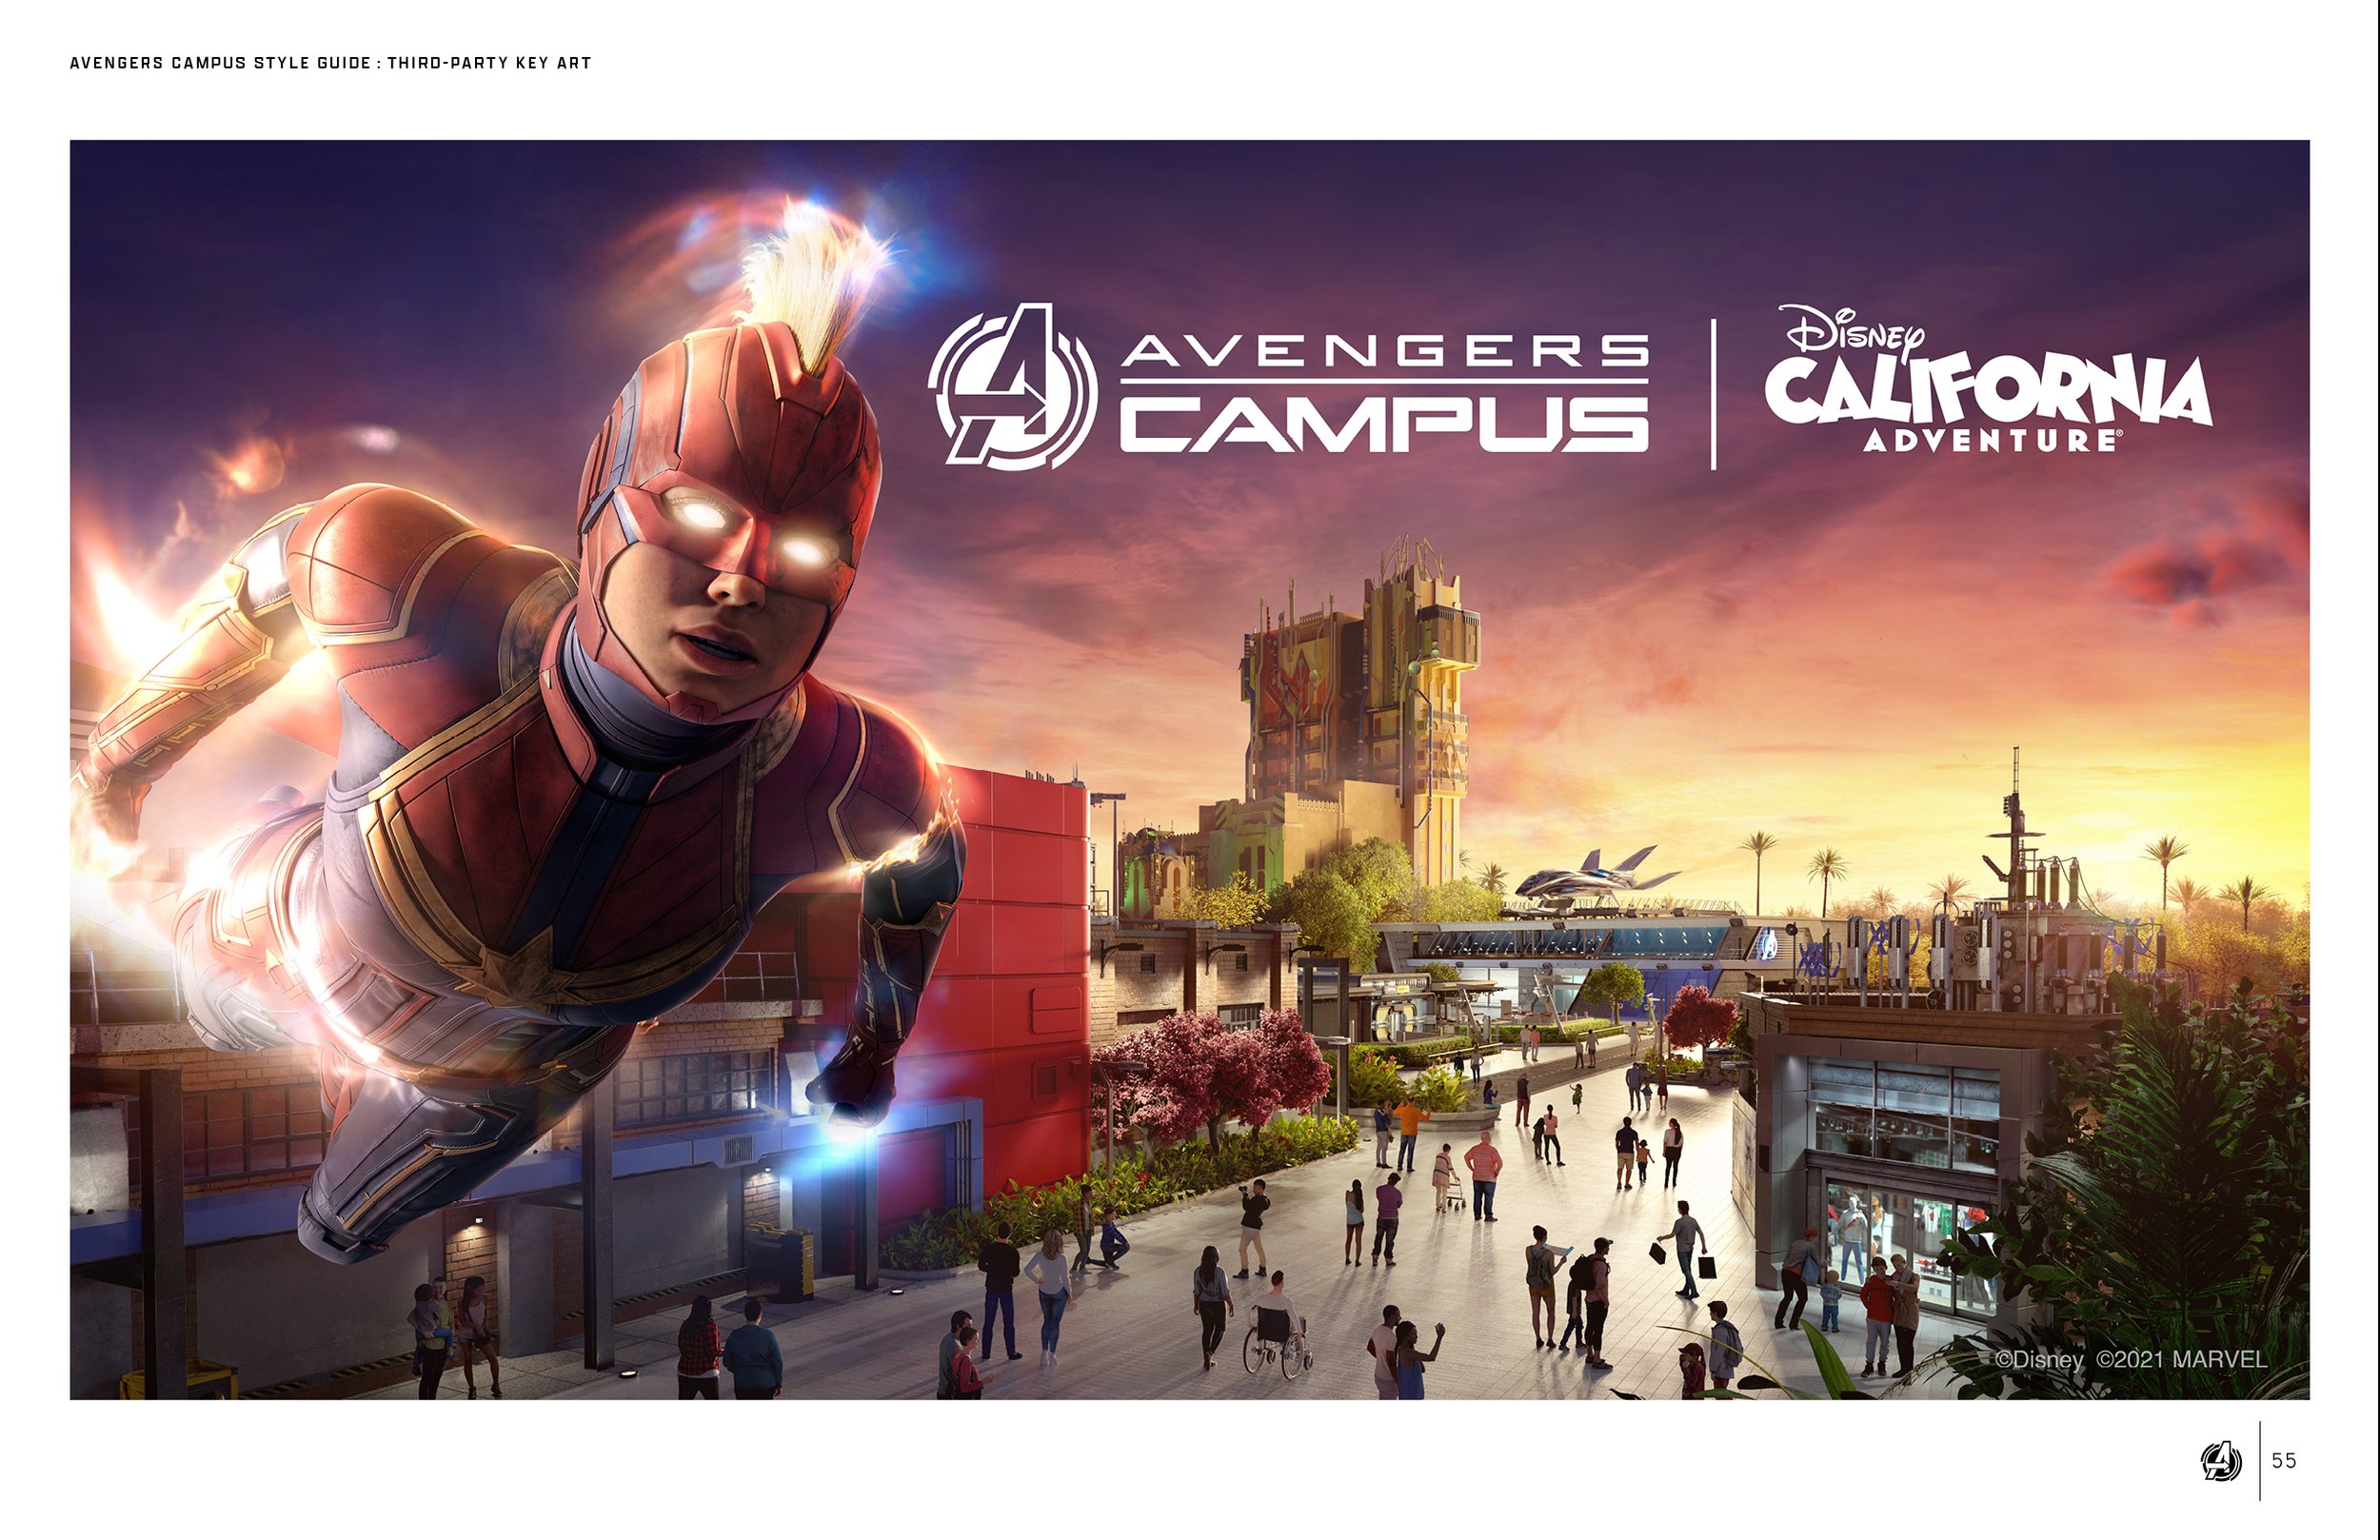 AvengersCampus_StyleGuide_Website_55.jpg